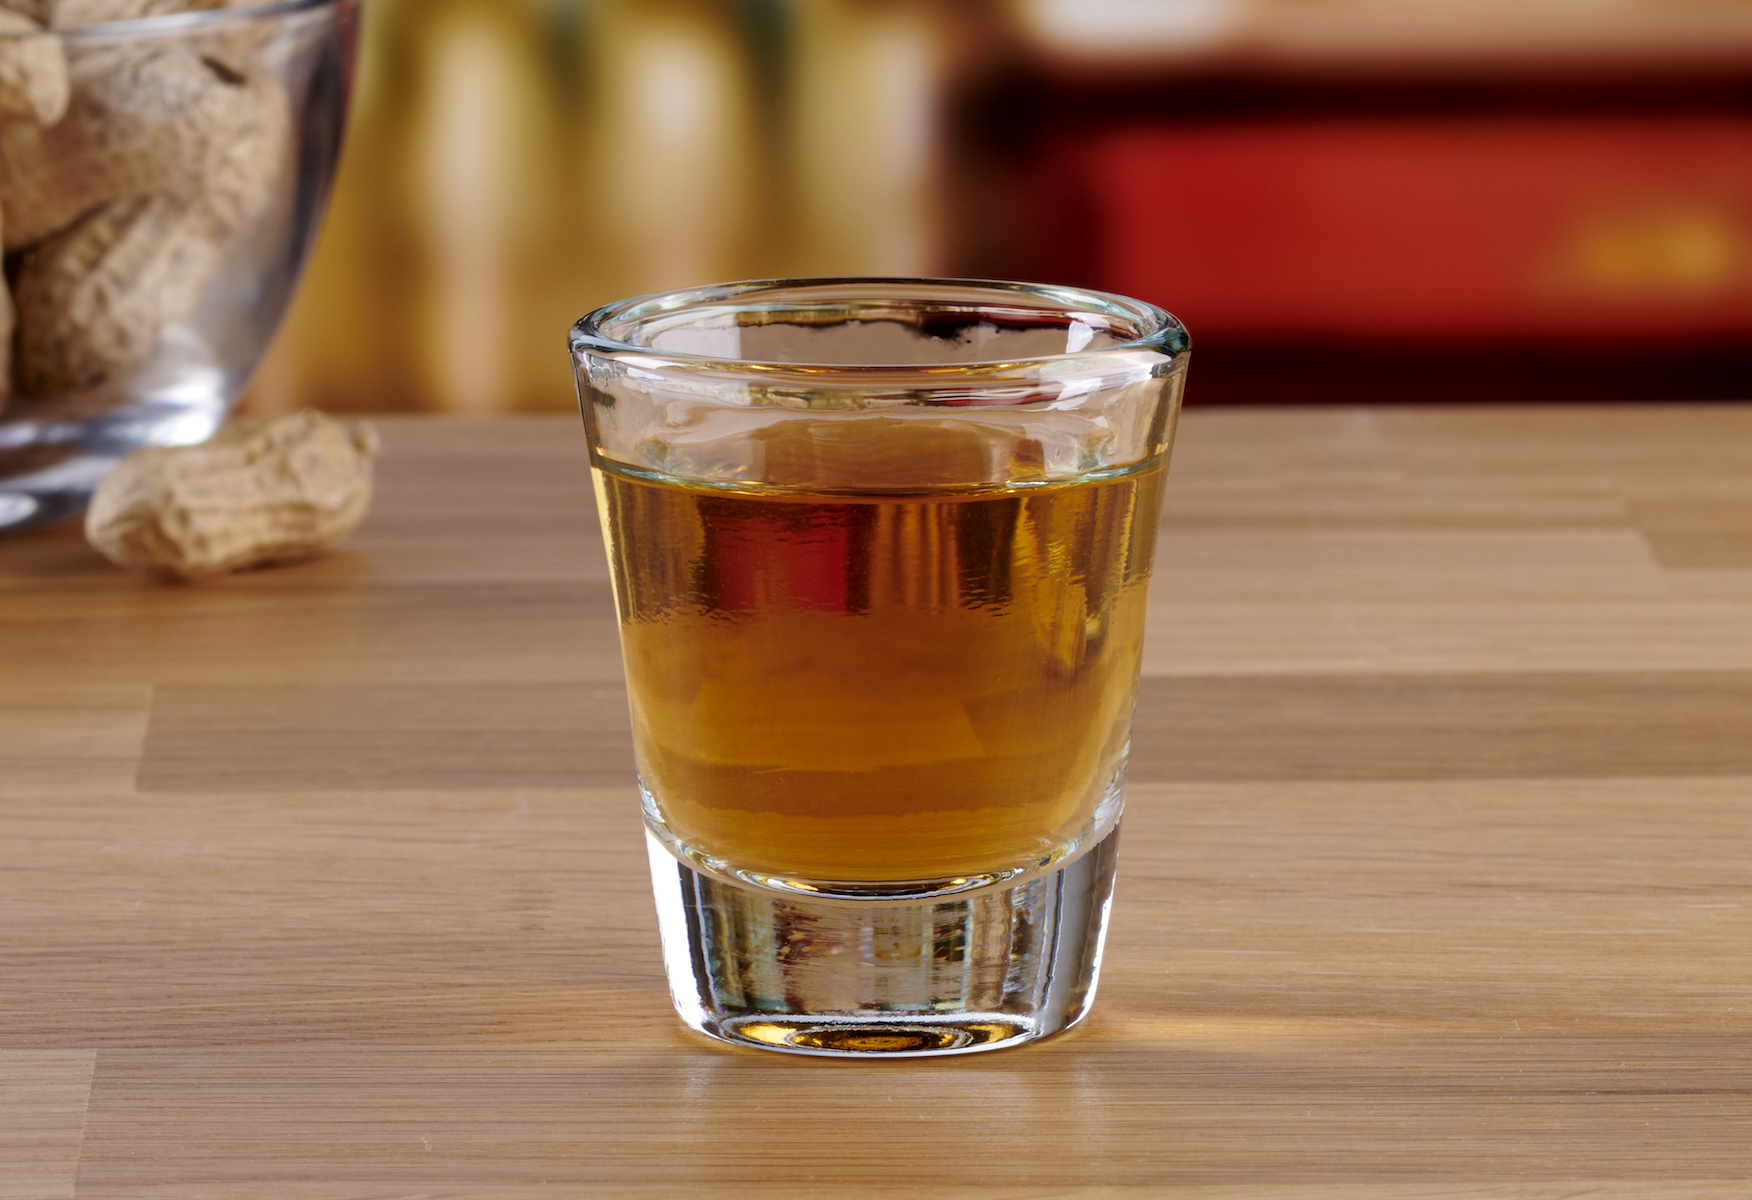 Whiskey Glass 1 1/2 oz. - Anchor Hocking FoodserviceAnchor Hocking